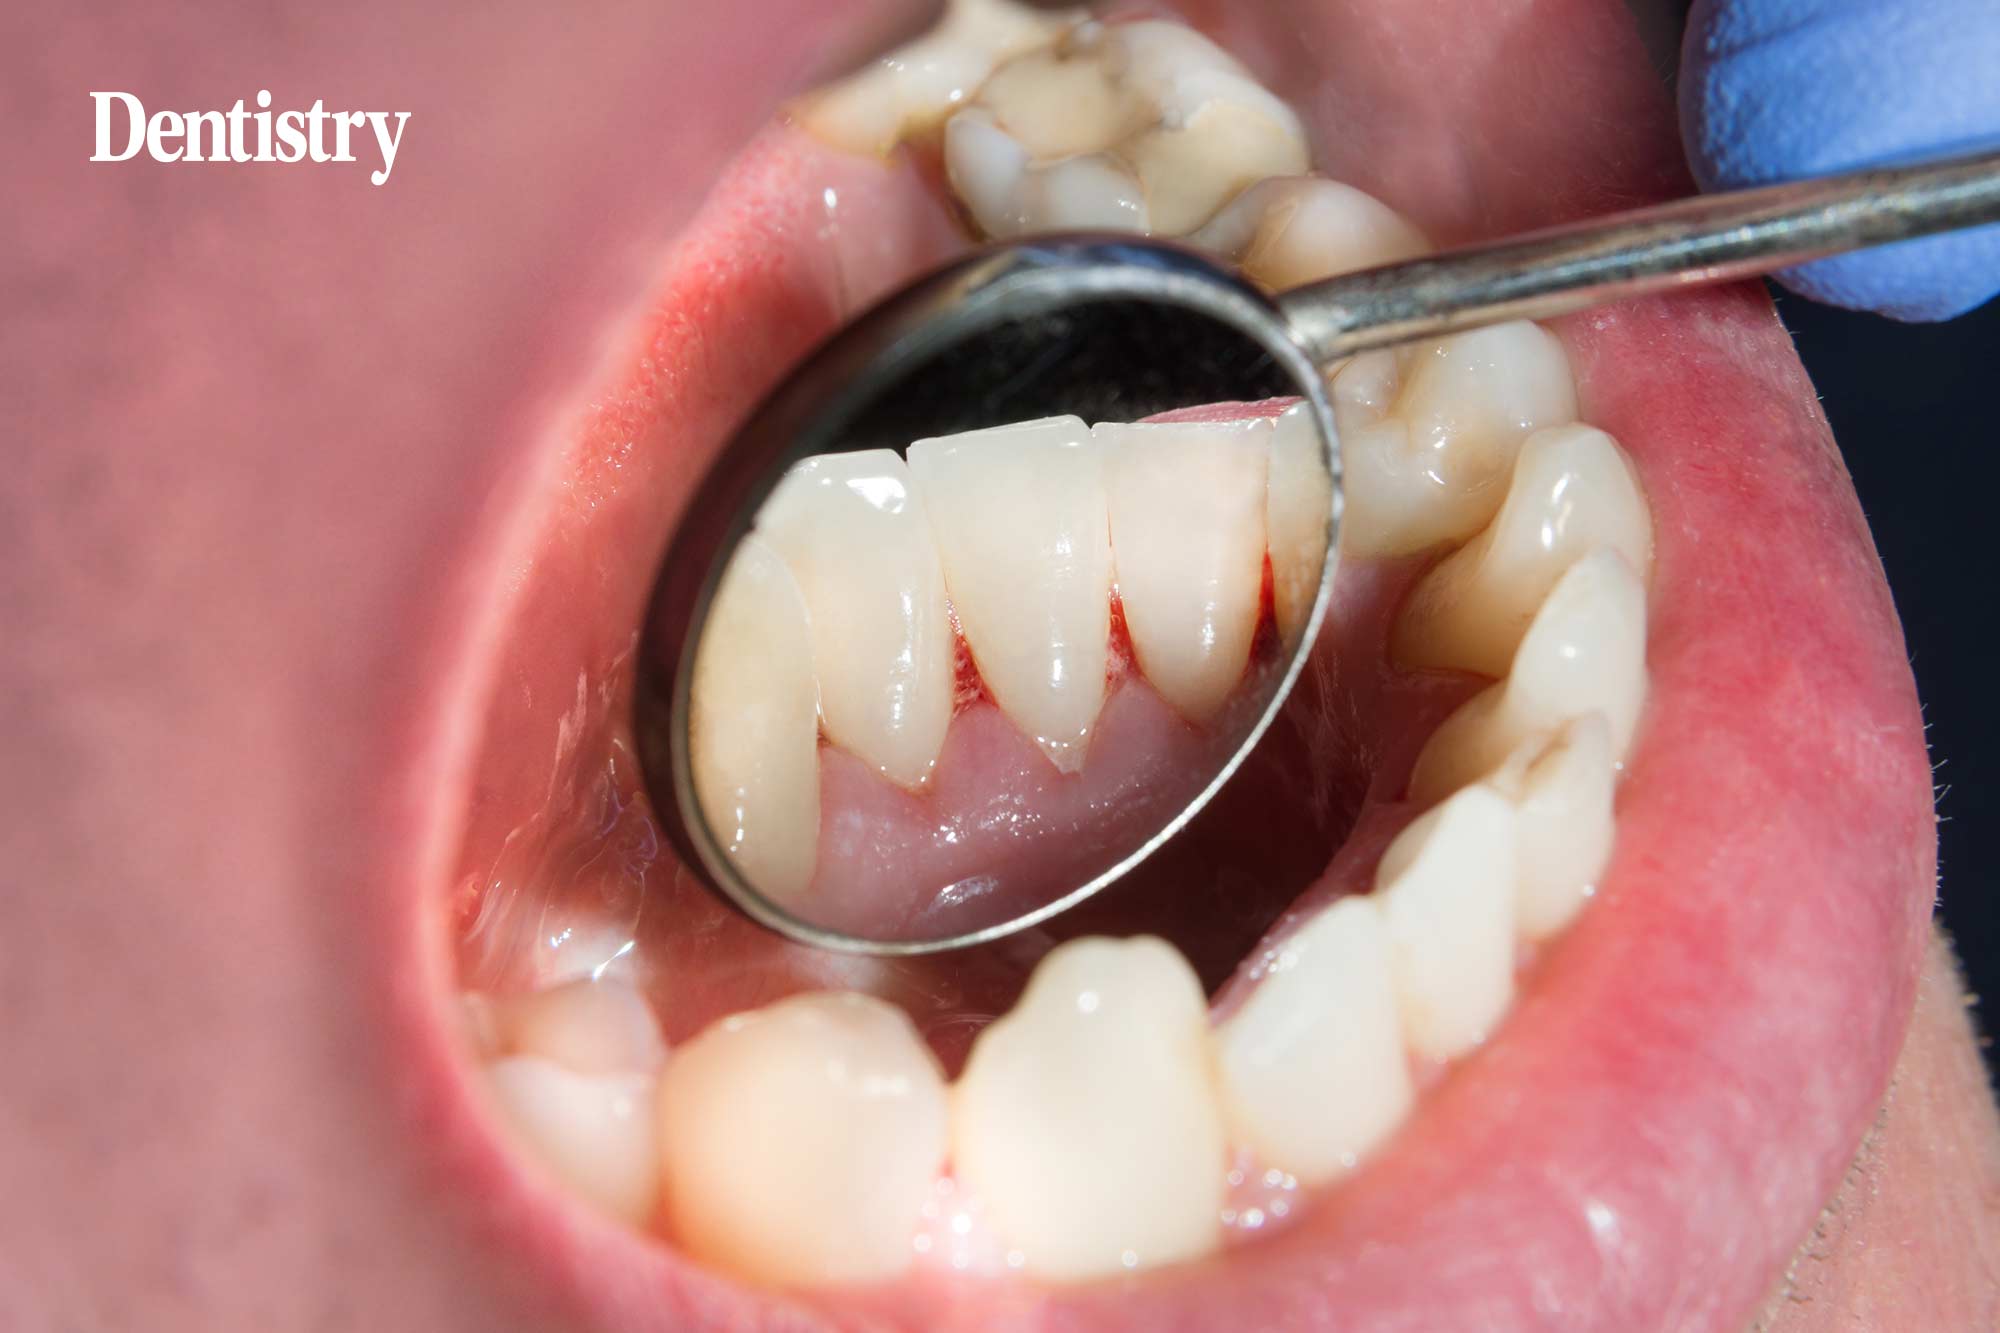 Biofilm and periodontal disease